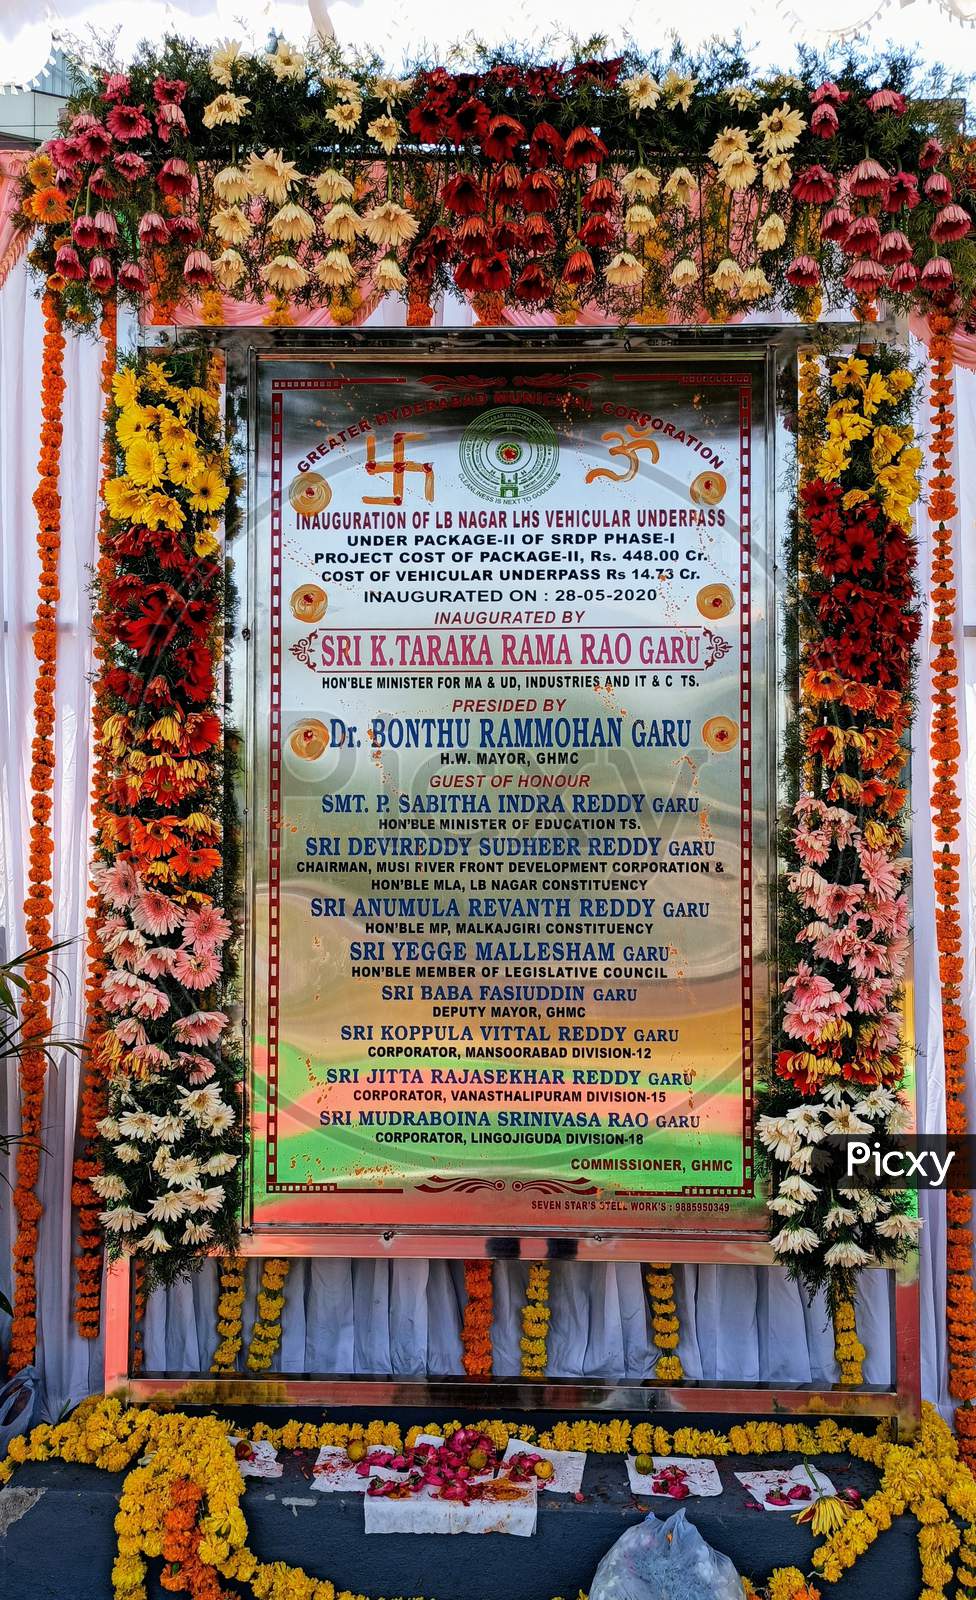 Inauguration Of LB Nagar LHS Vehicular Underpass Inaugurated By Sri K. Taraka Rama Rao On May 28, 2020 in Hyderabad city